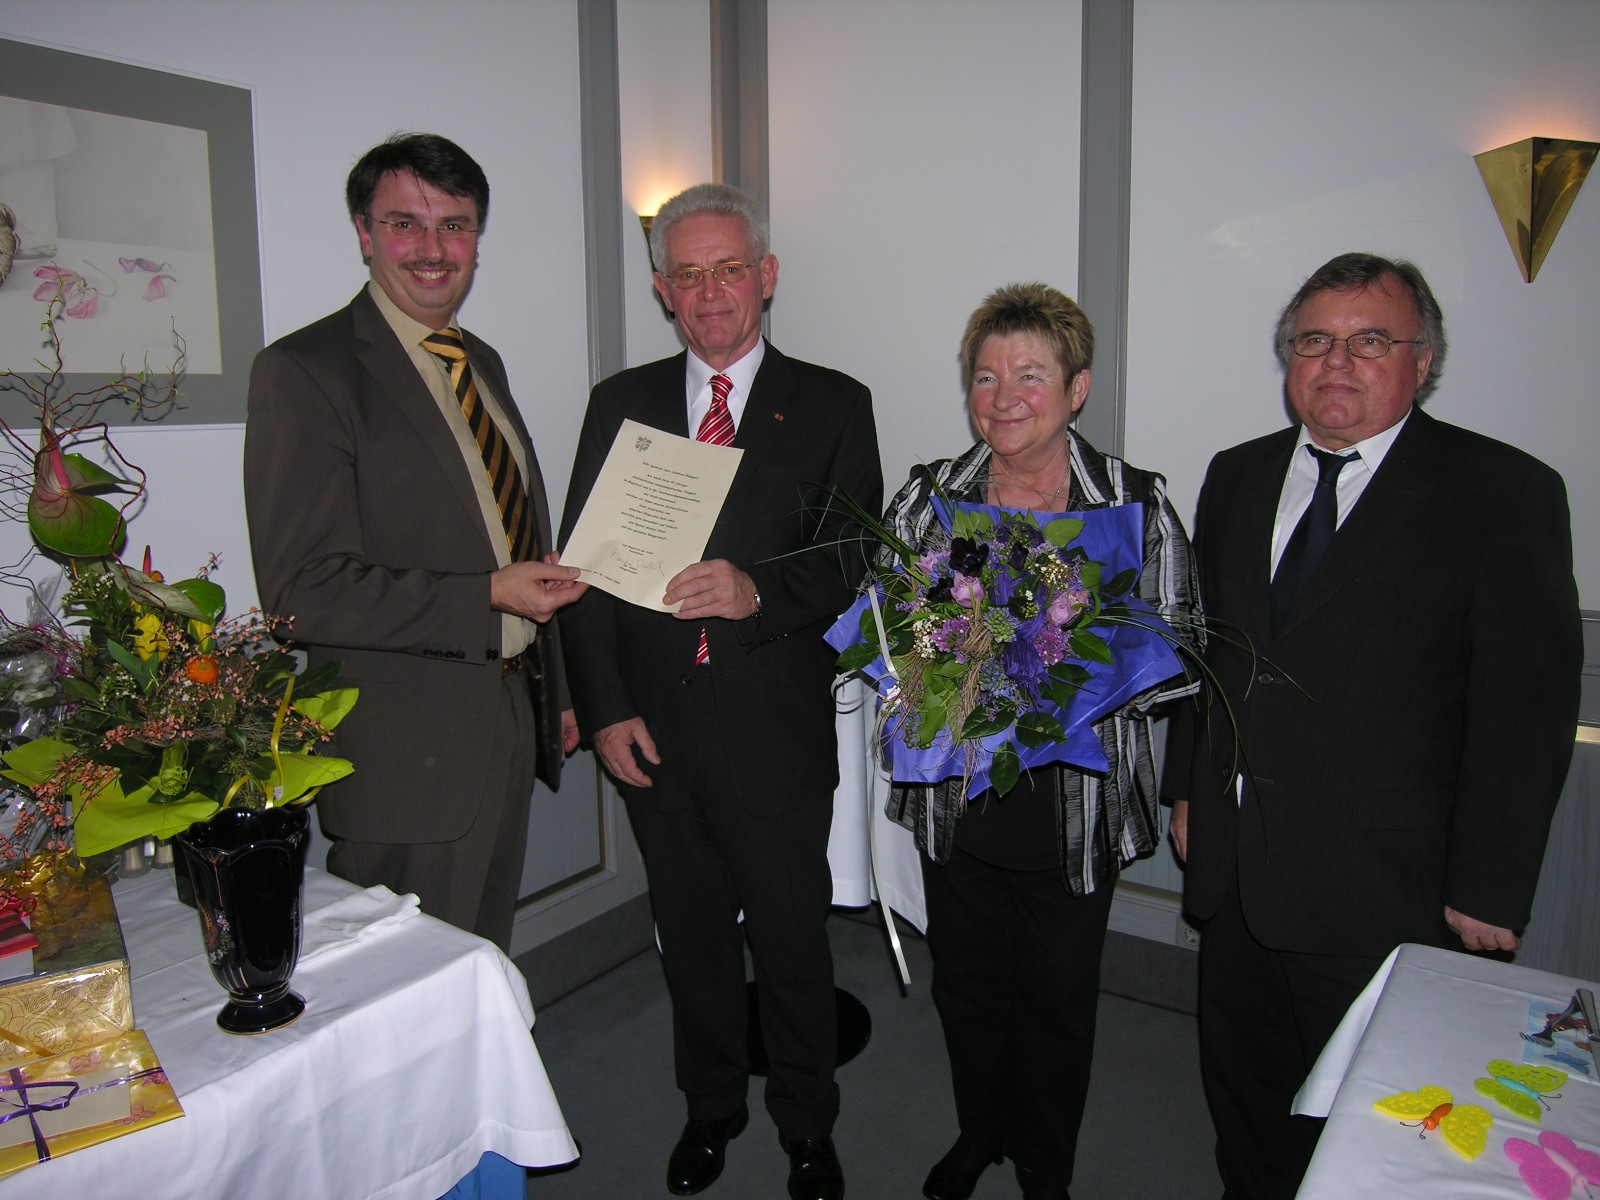 v.l.n.r.: Bürgermeister Manfred Ockel, Alfred Wiegand, Gerda Wiegand, Gerald Weiß (MdB)